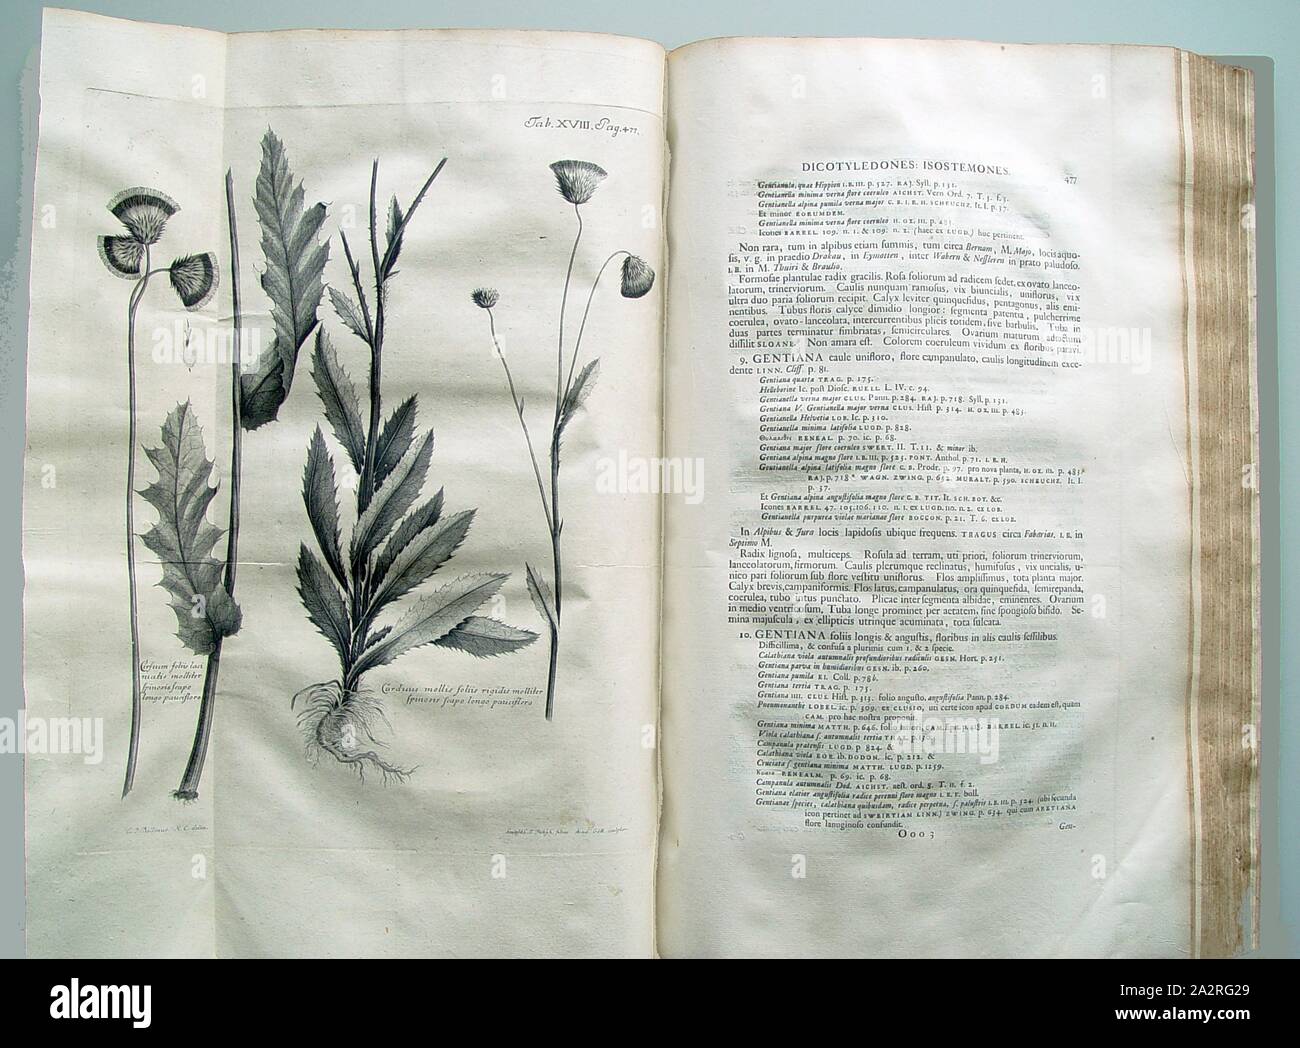 Thistle soft spiny leaves by gently biting the long shaft a few flowers ..., Illustration of a thistle species from the 18th century, signed: C.J. Rollinus, M.C. delin, Sculpsite C. F. Fitzsch filius Acad., Gött, Sculptor, Tab. XVIII, Pag., 477, Rollinus, C. J. (del.); Fitsch, F. (sculp.), 1742, Albrecht von Haller: [...] Enumeratio methodica stirpium Helvetiae indigenarum. Tomus II. Gottingae: ex Officina Academica Abrami Vandenhoek, [1742 Stock Photo